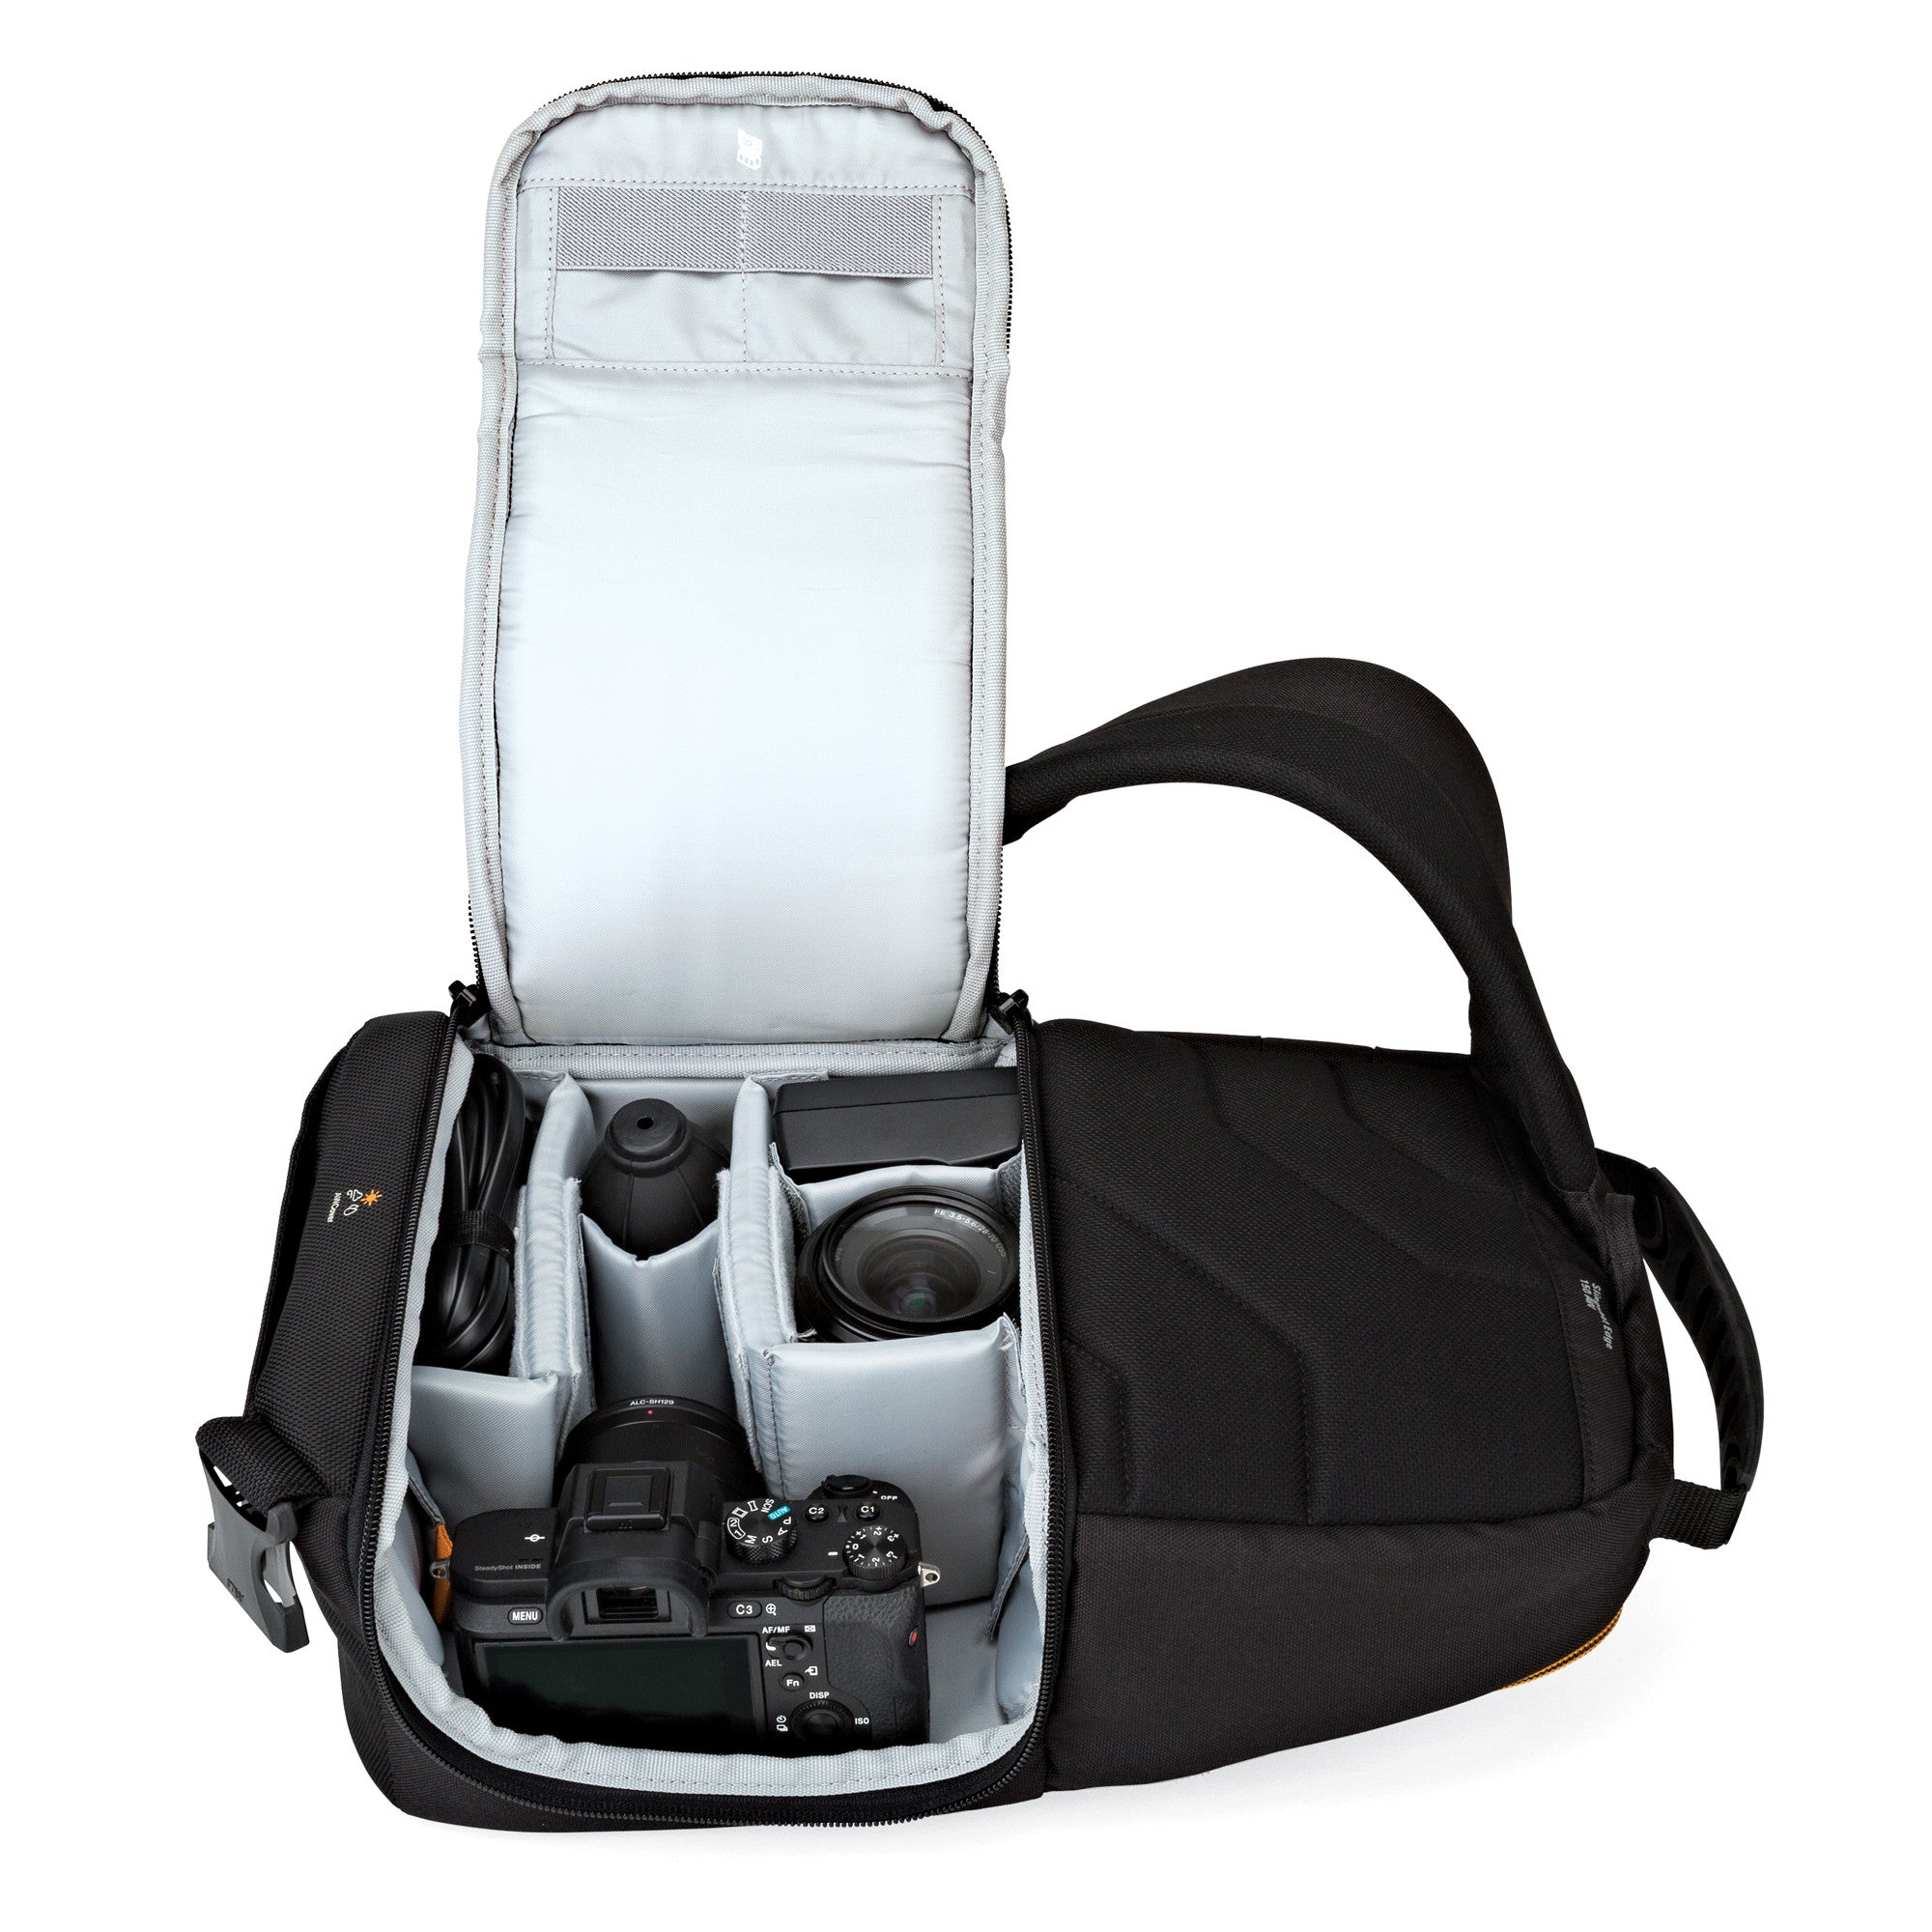 Lowepro Slingshot Edge 250 AW Camera Bag, bags sling / daypacks, Lowepro - Pictureline  - 2